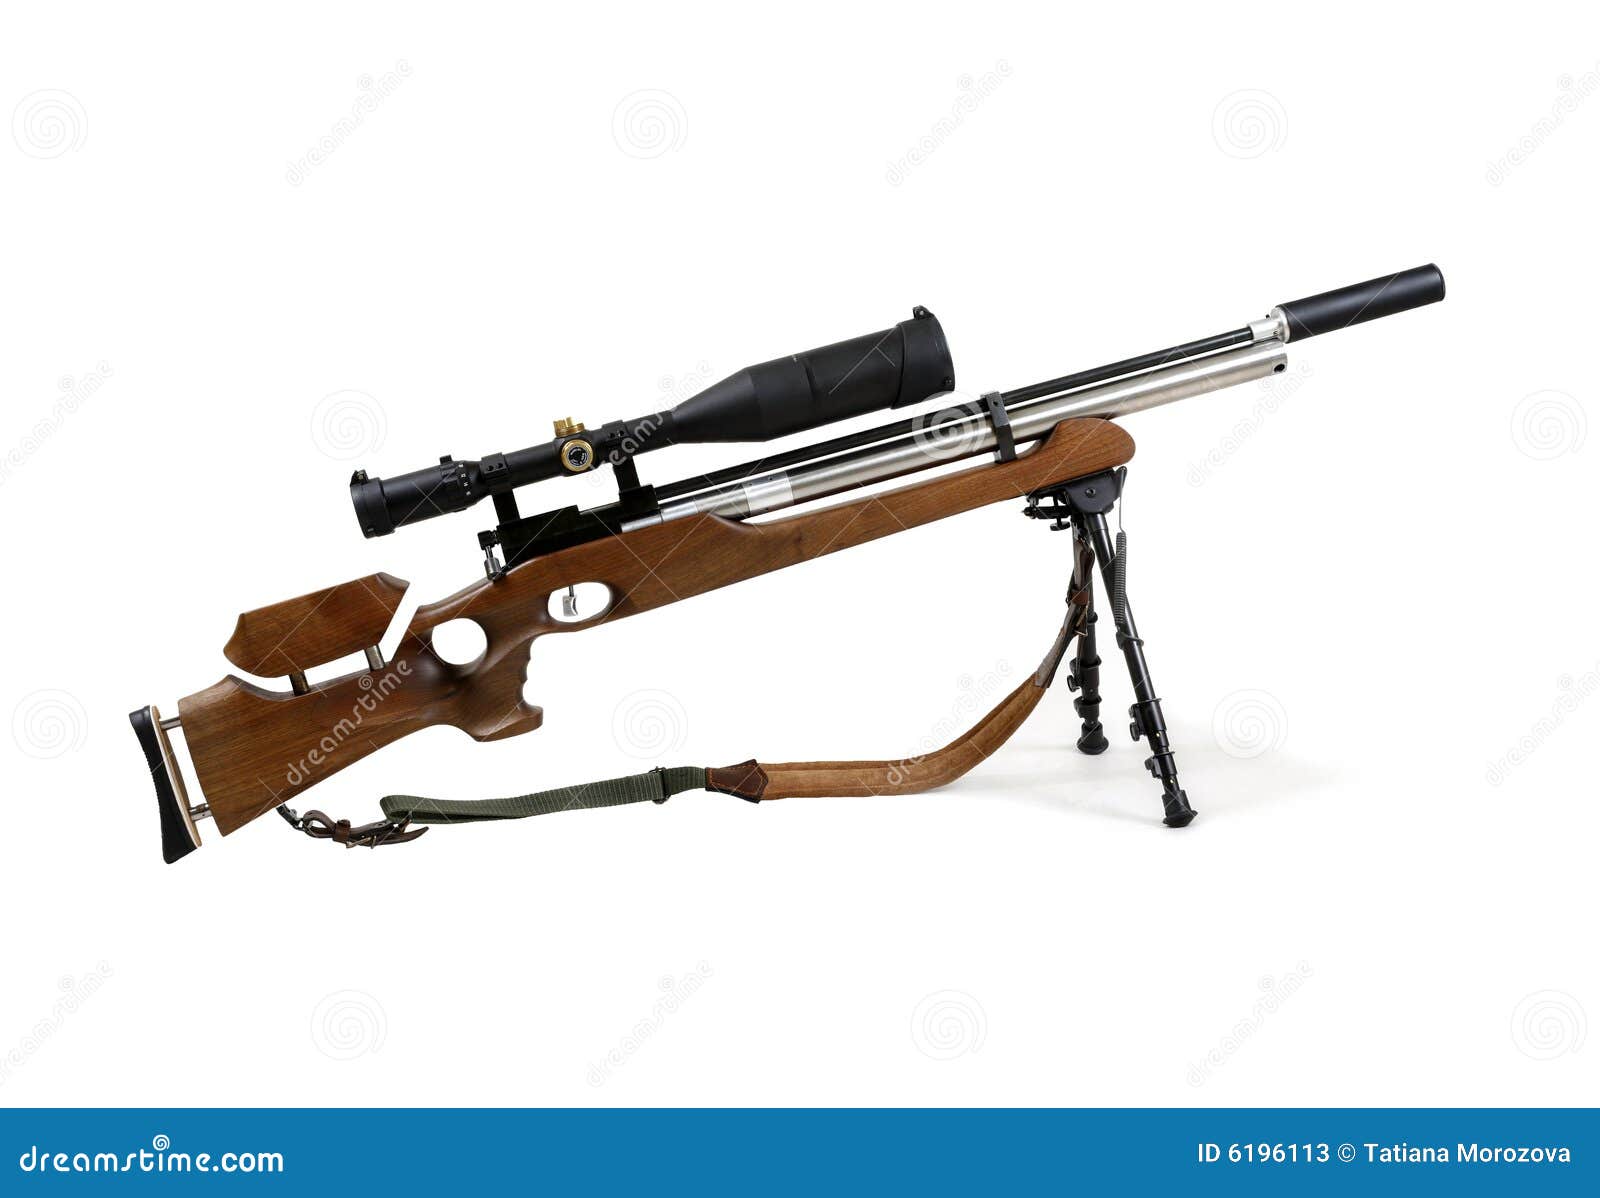 Big gun stock image. Image of ammunition, shotgun, shiny - 6196113